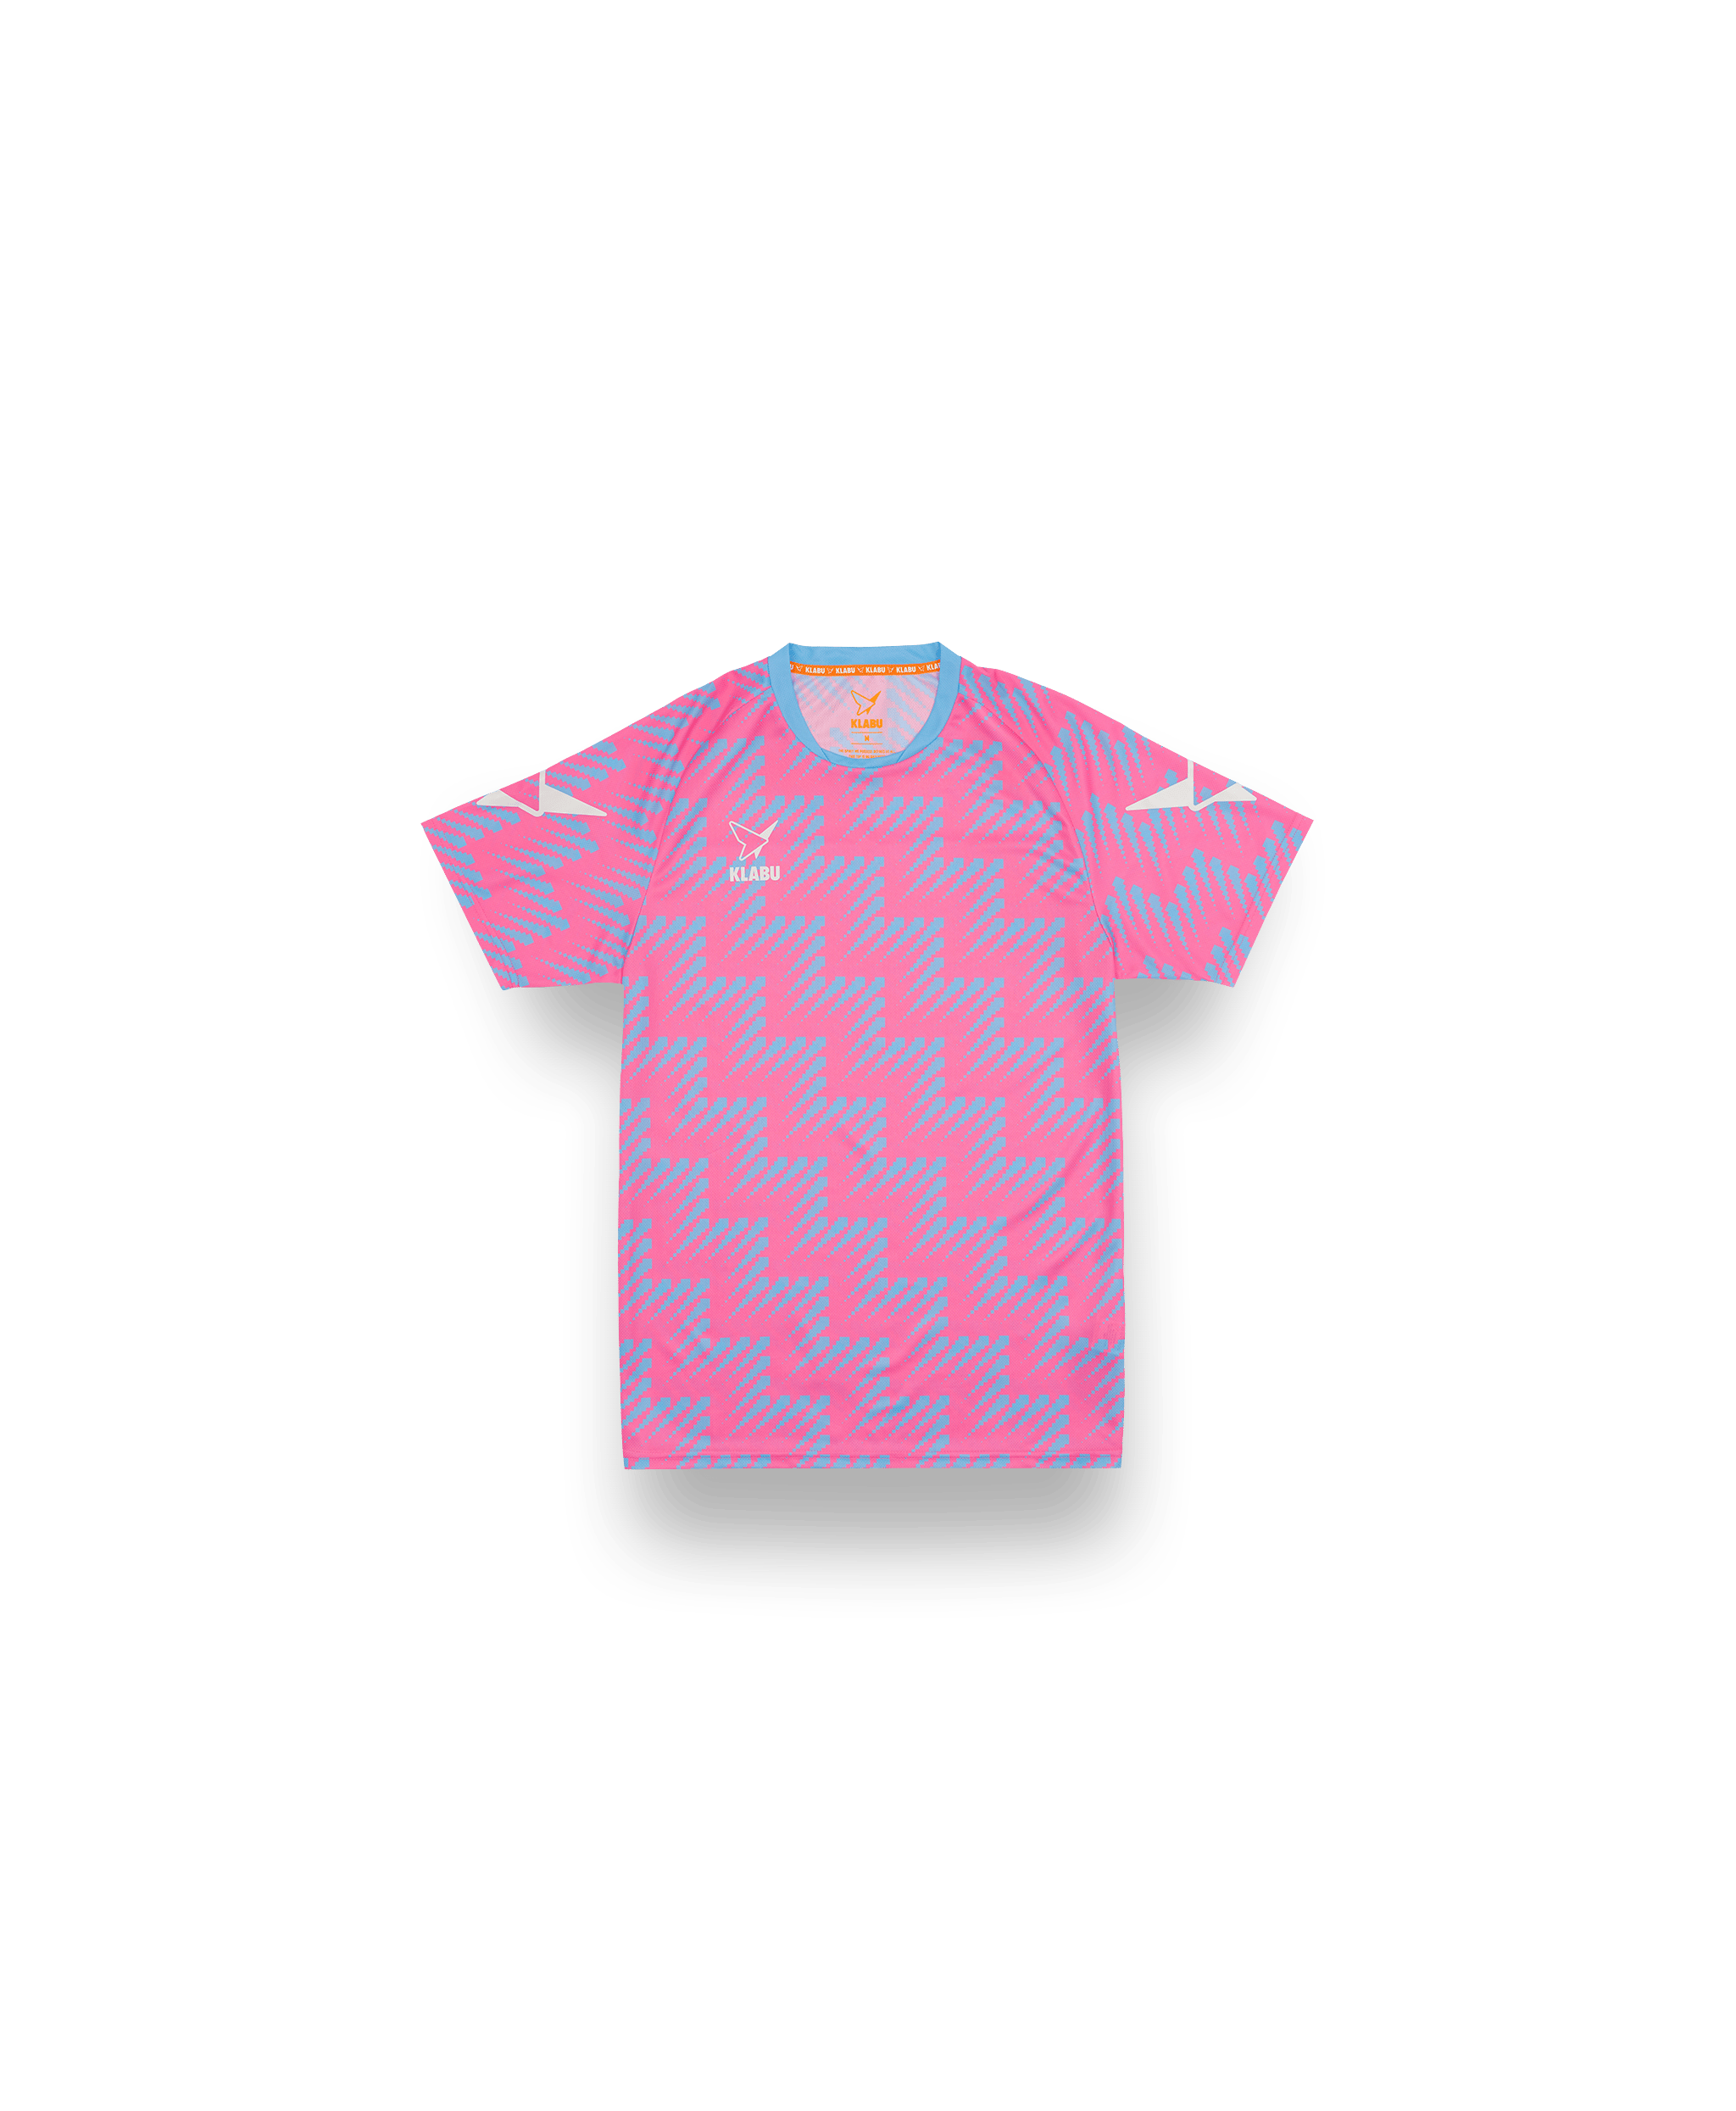 KLABU Teamwear Shirt Pink